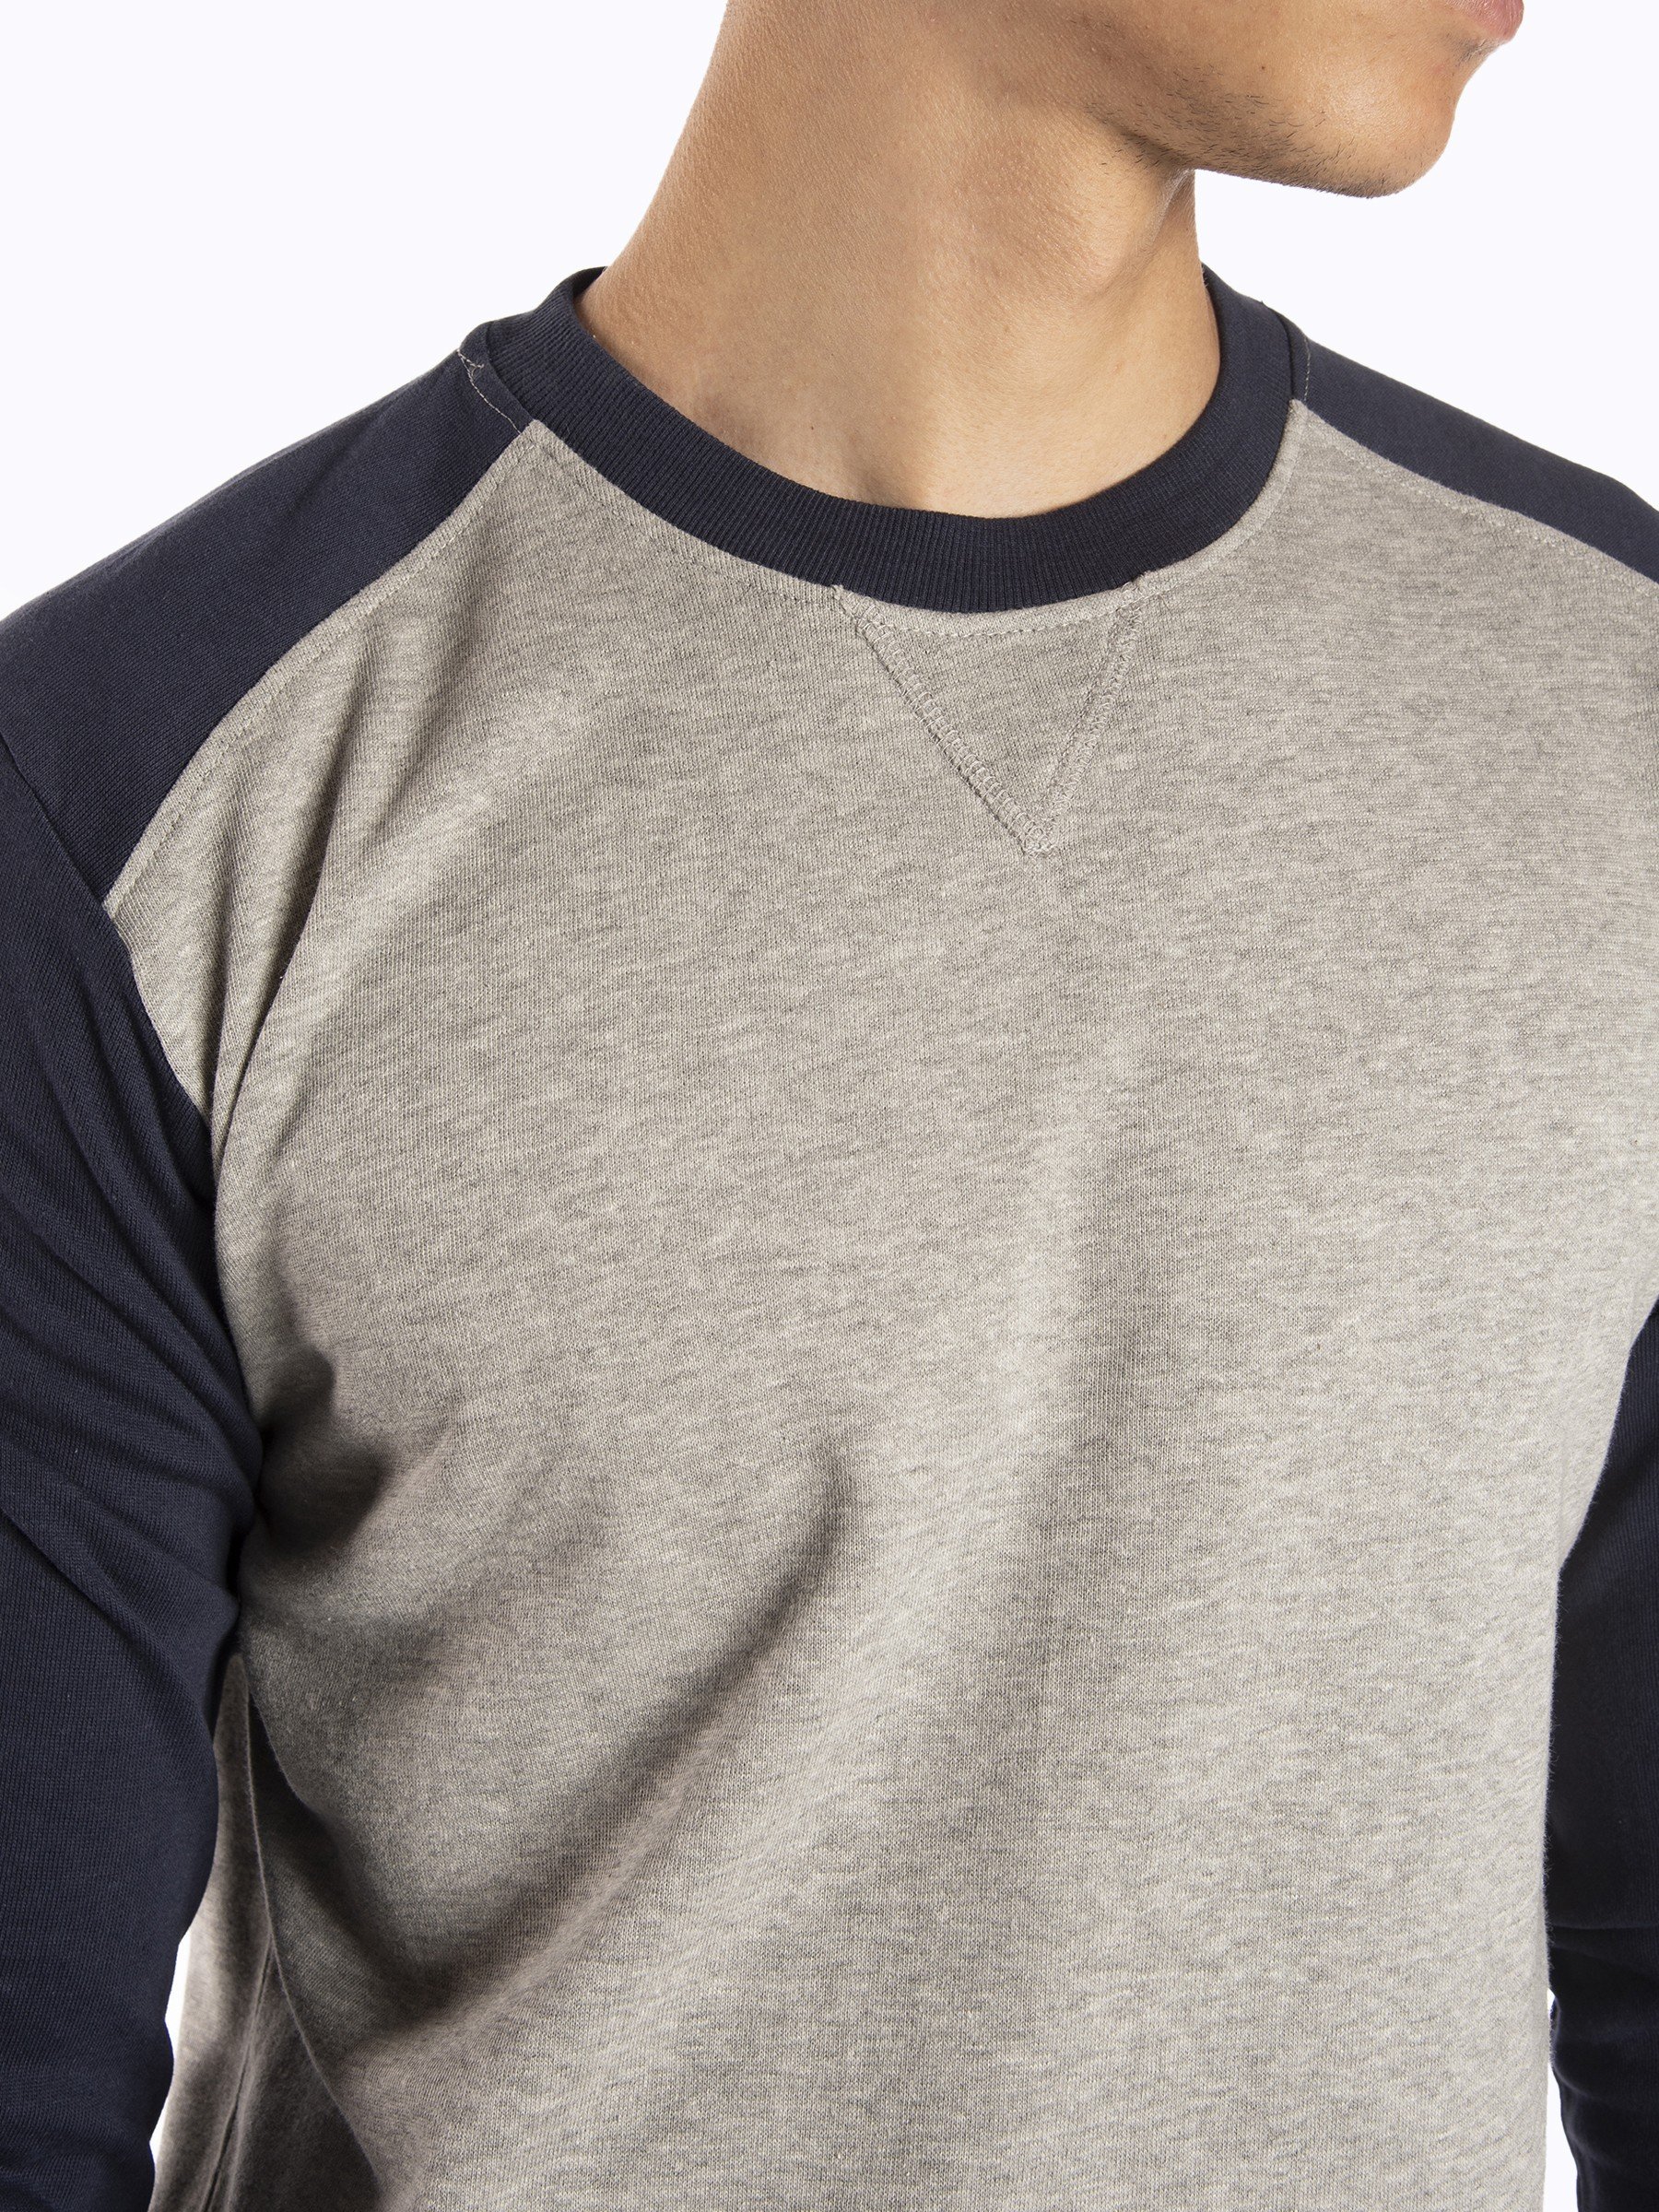 Sweatshirt with kangaroo pocket and contrast sleeves | GATE